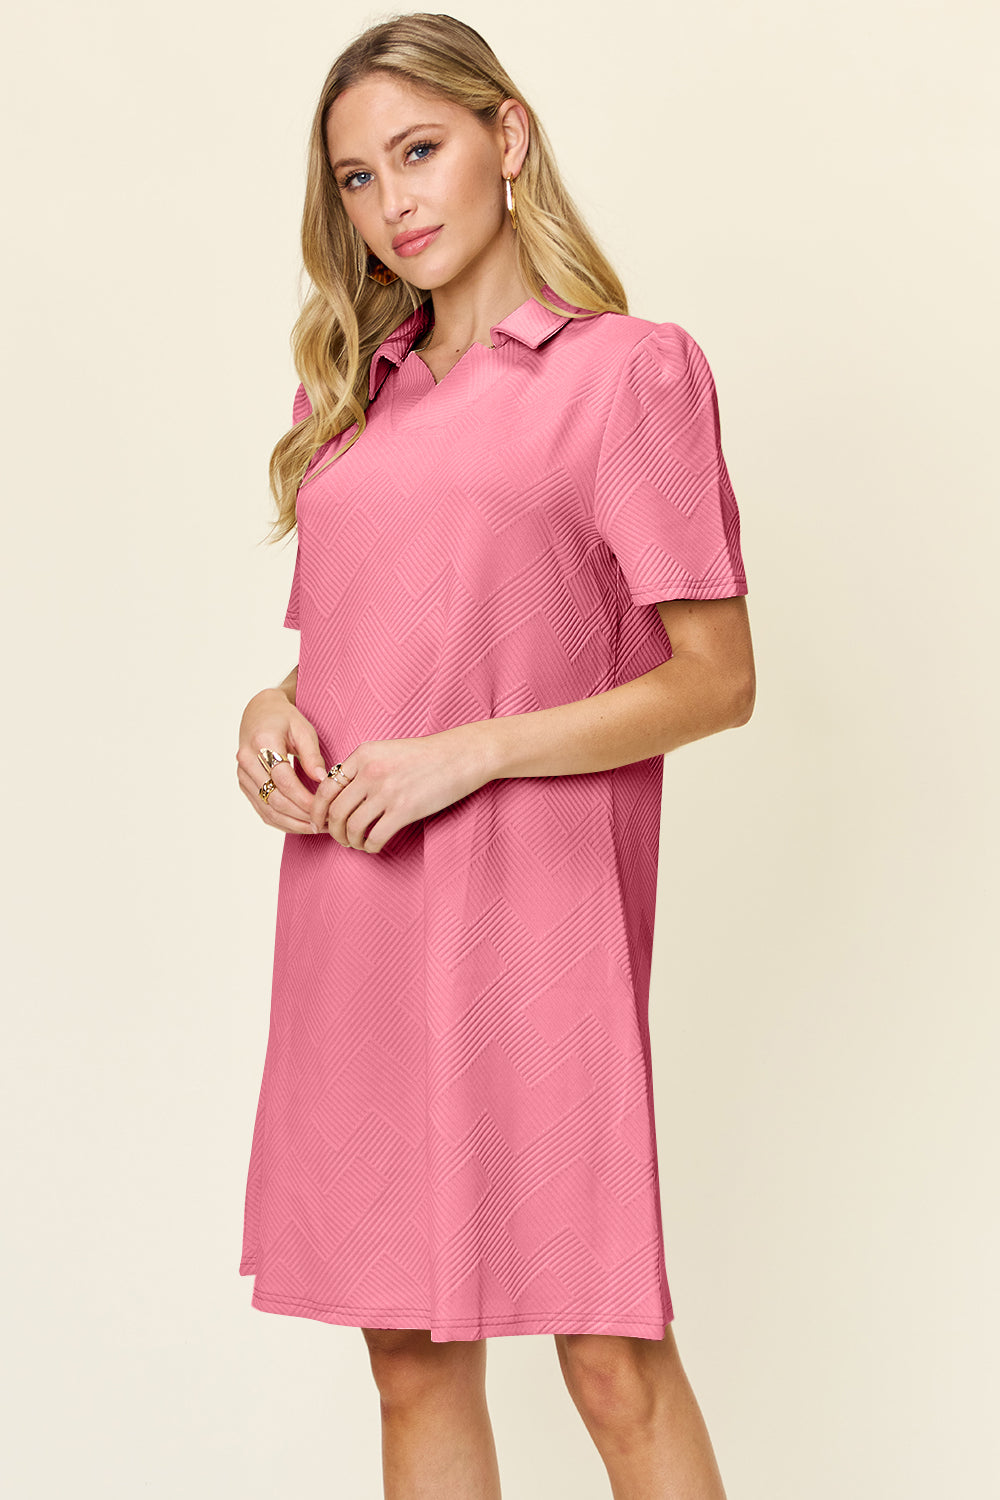 Textured Collared Short Sleeve Dress Blush Pink